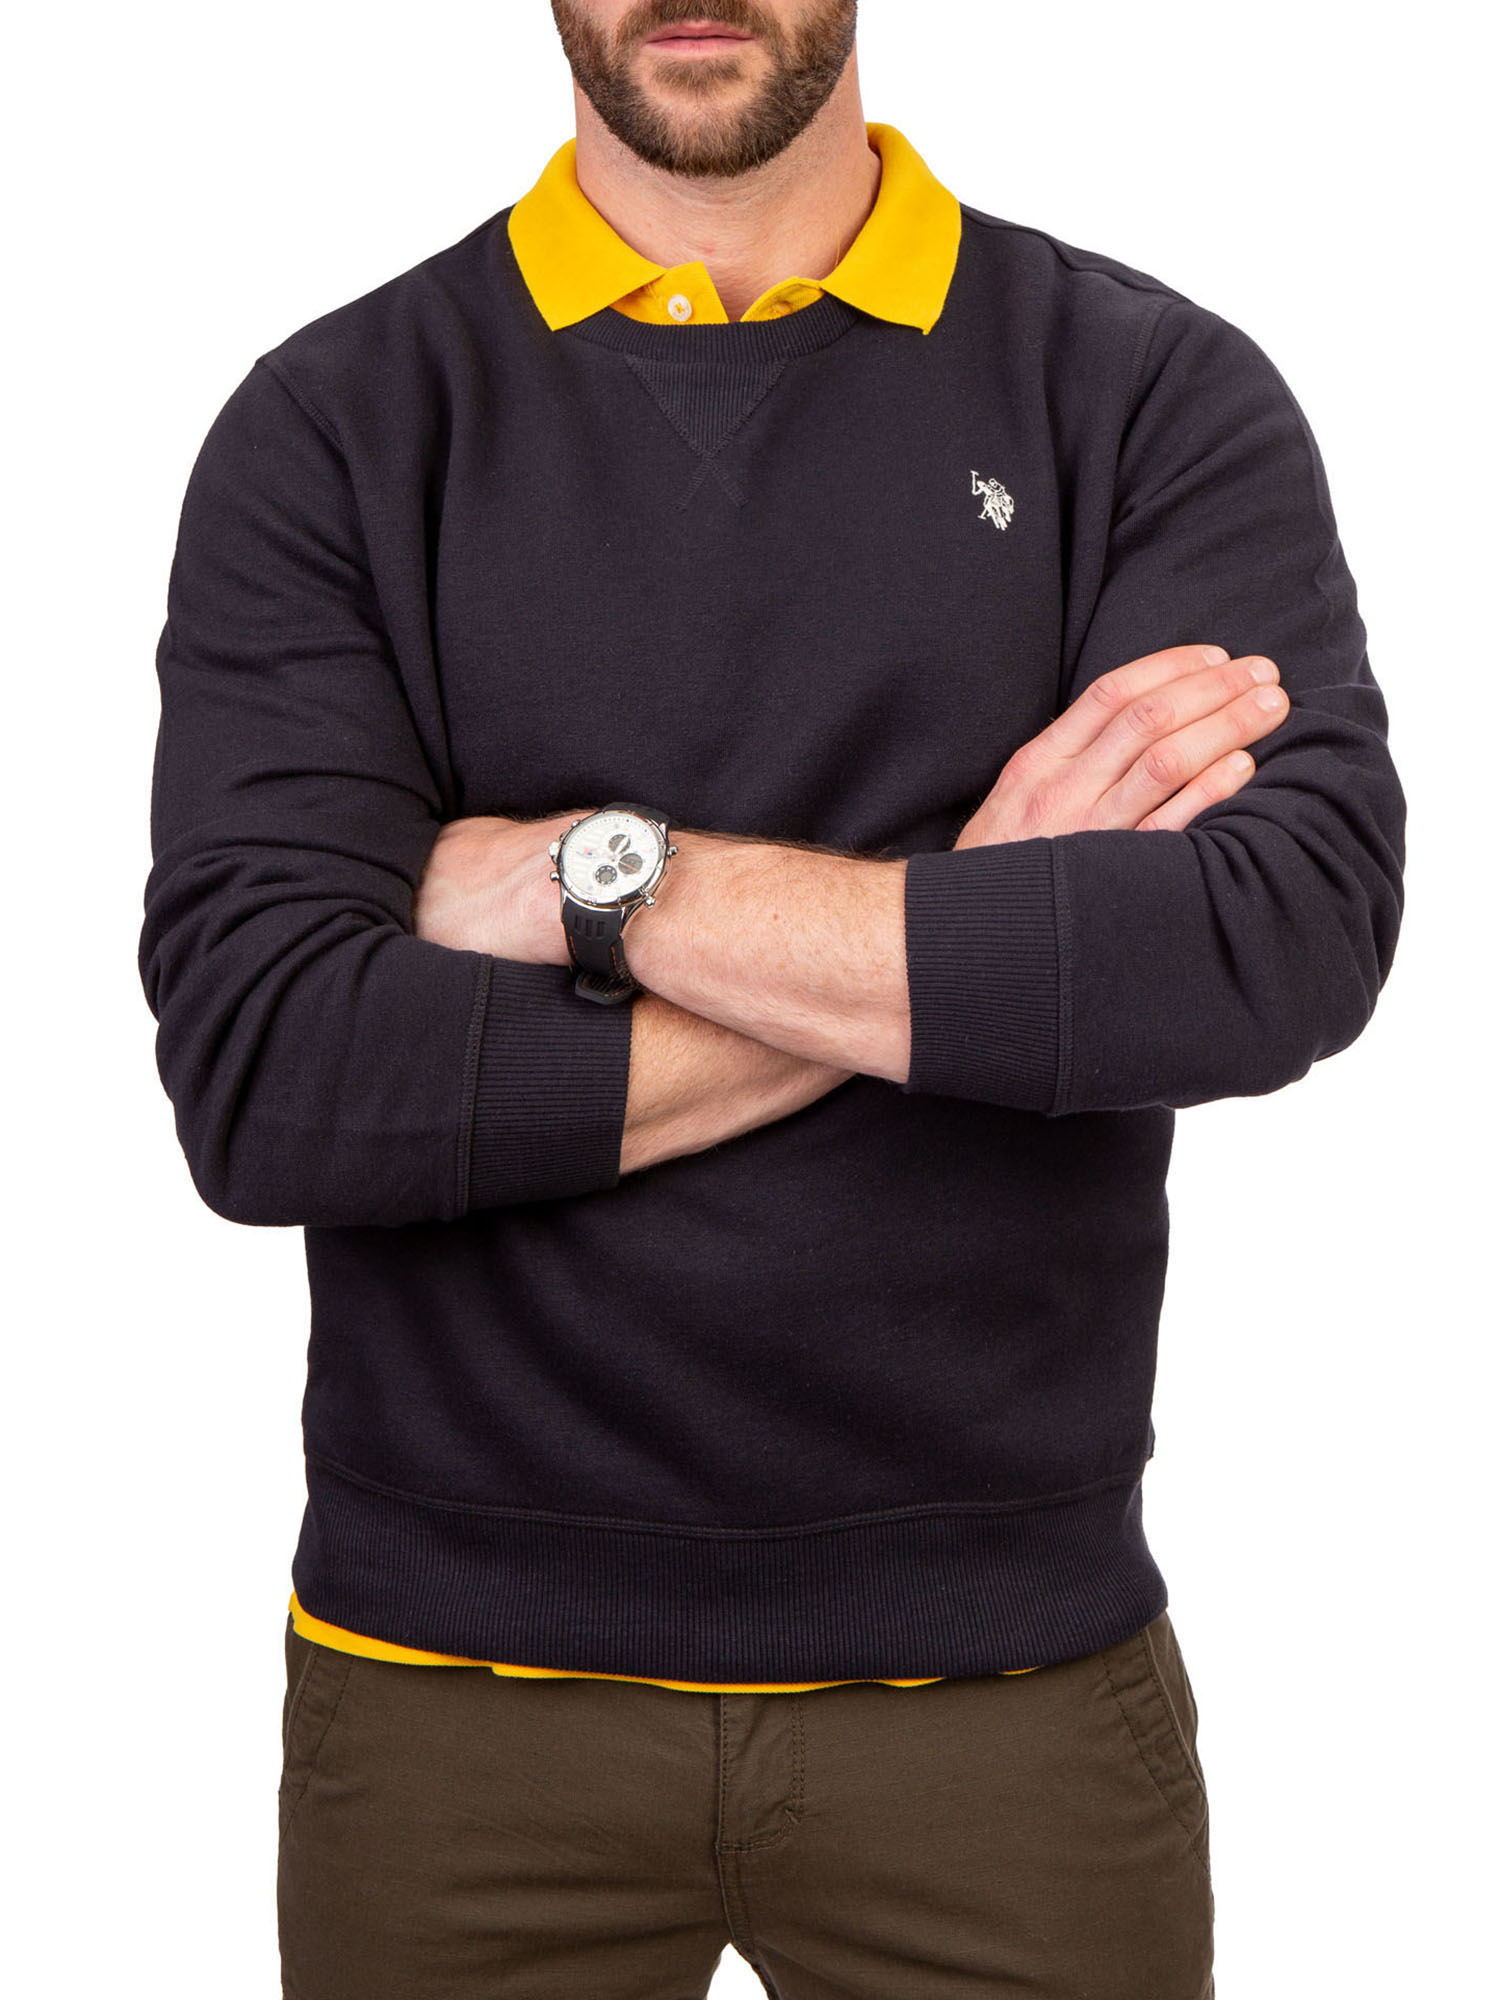 U.S. Polo Assn. Men's Knit Sweater Shirt - image 1 of 5